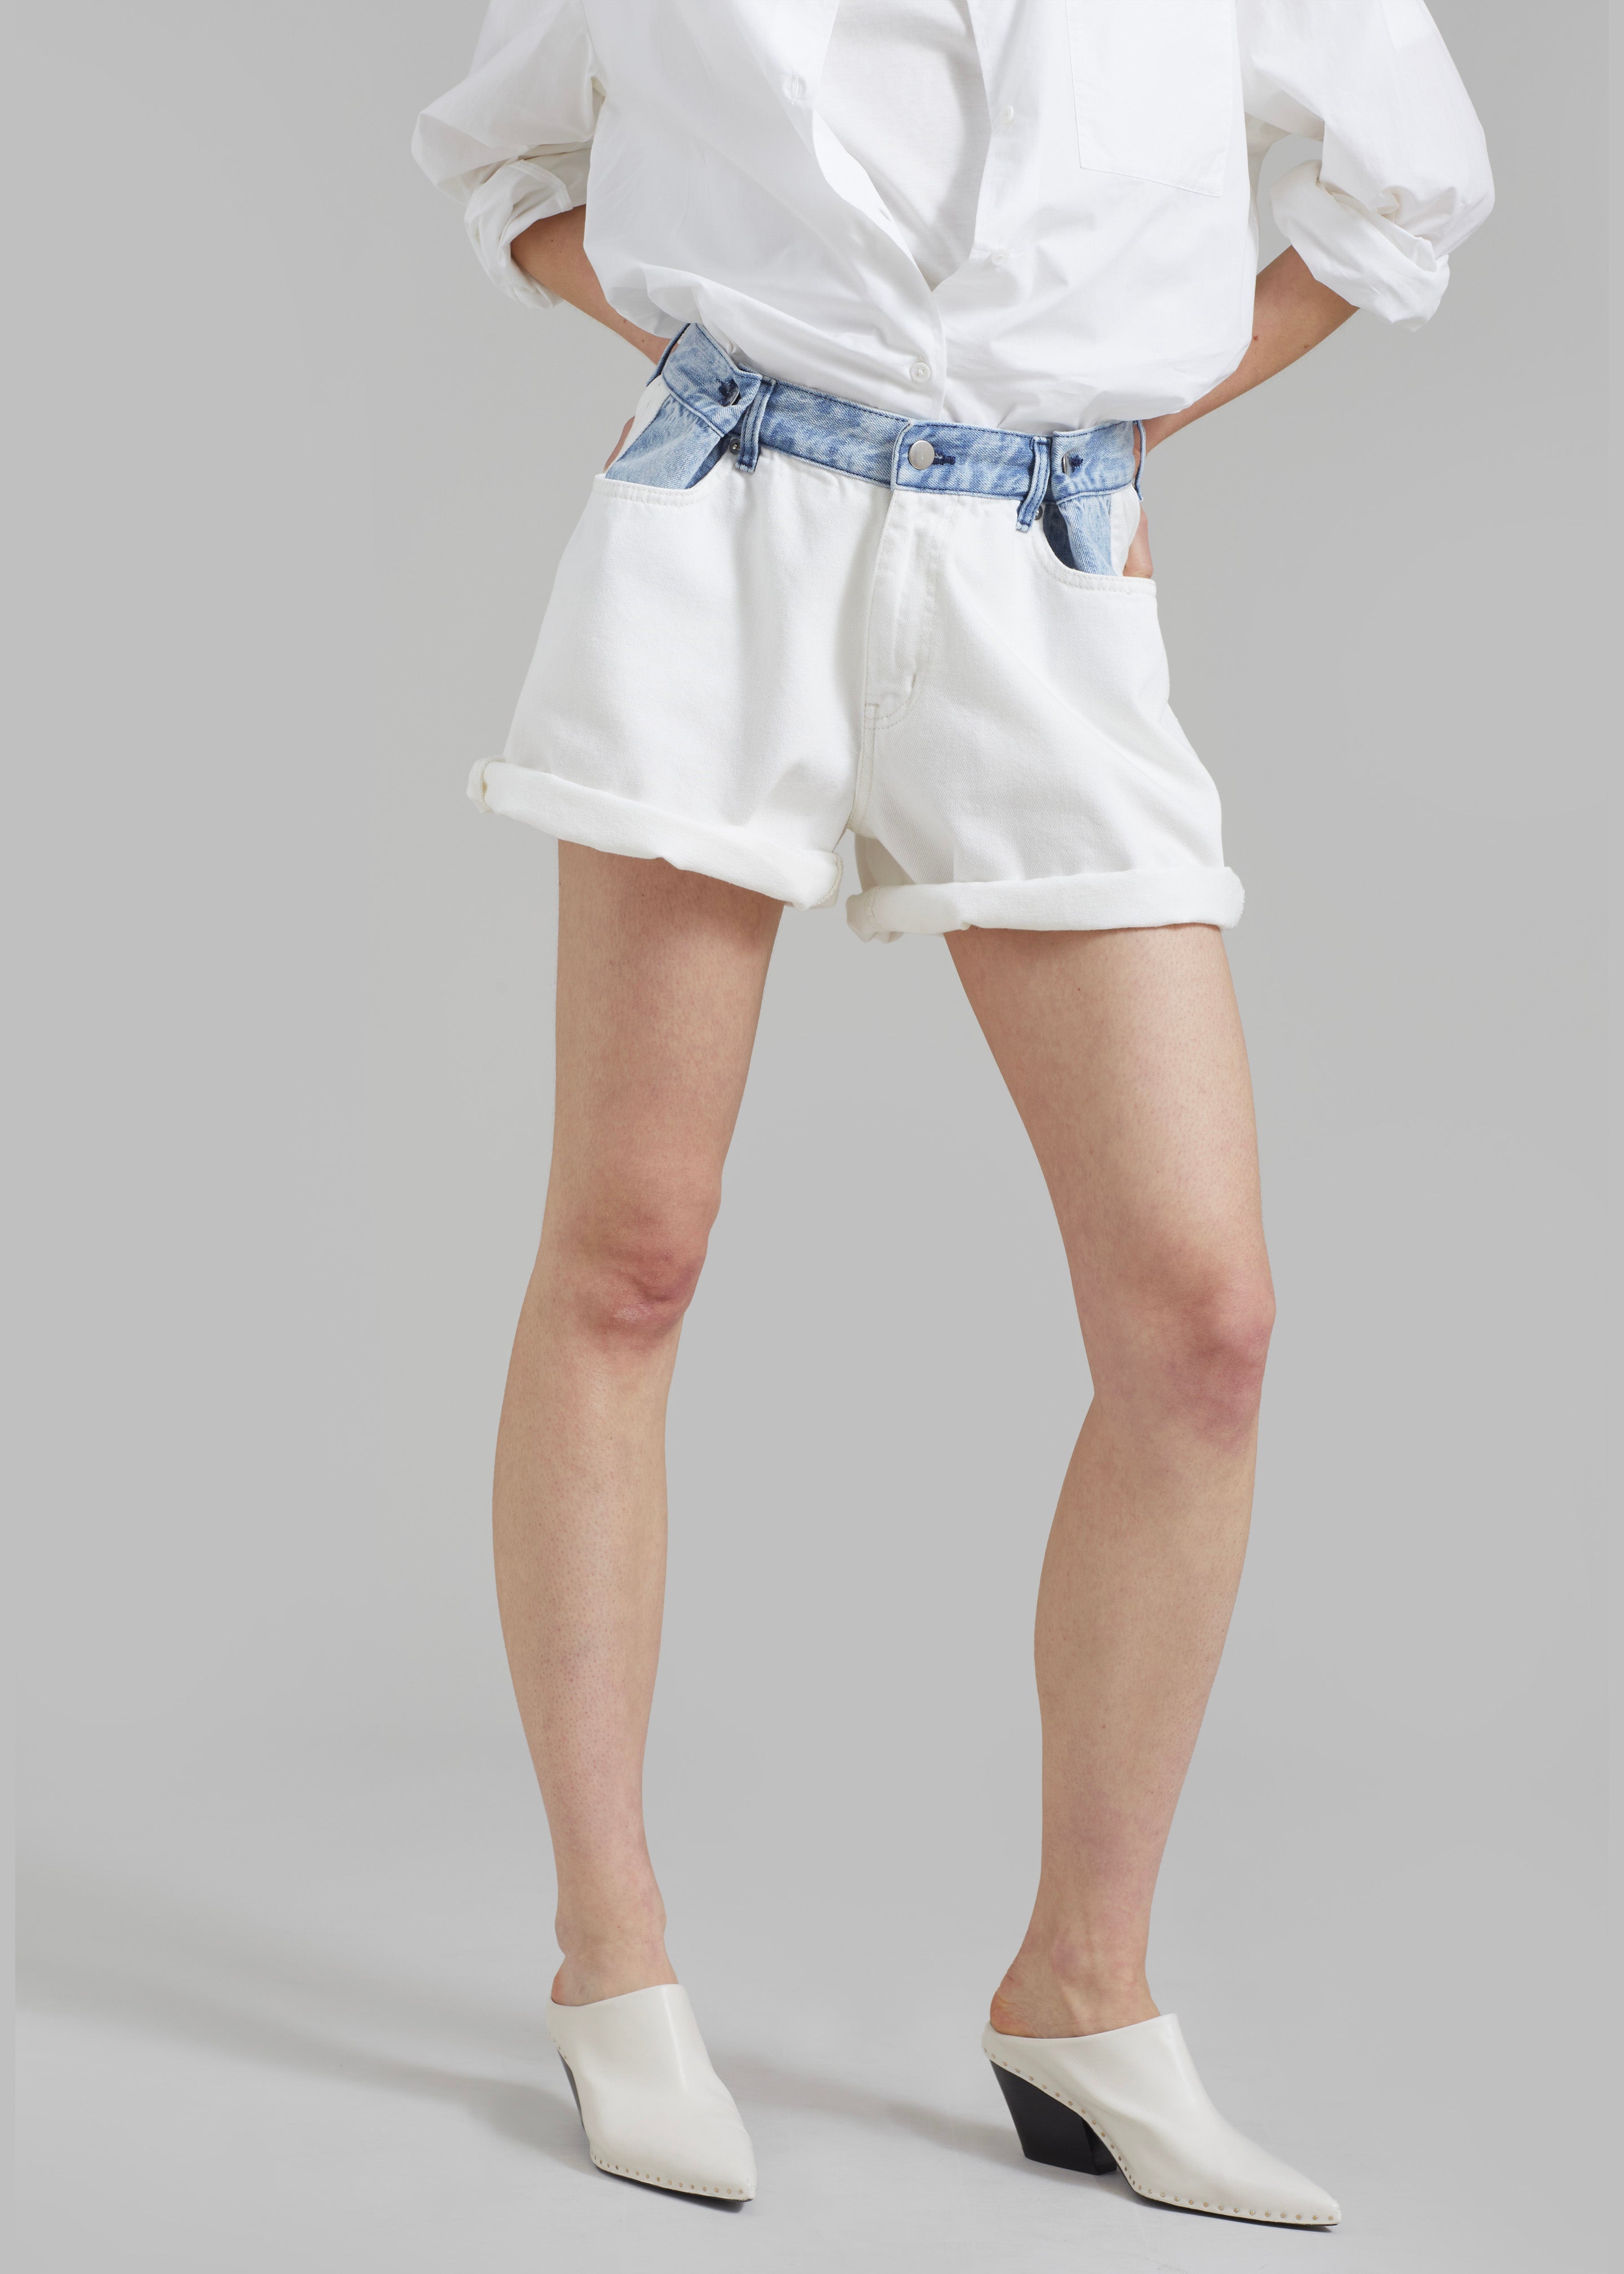 Hayla Contrast Denim Shorts - Off White/Blue - 5